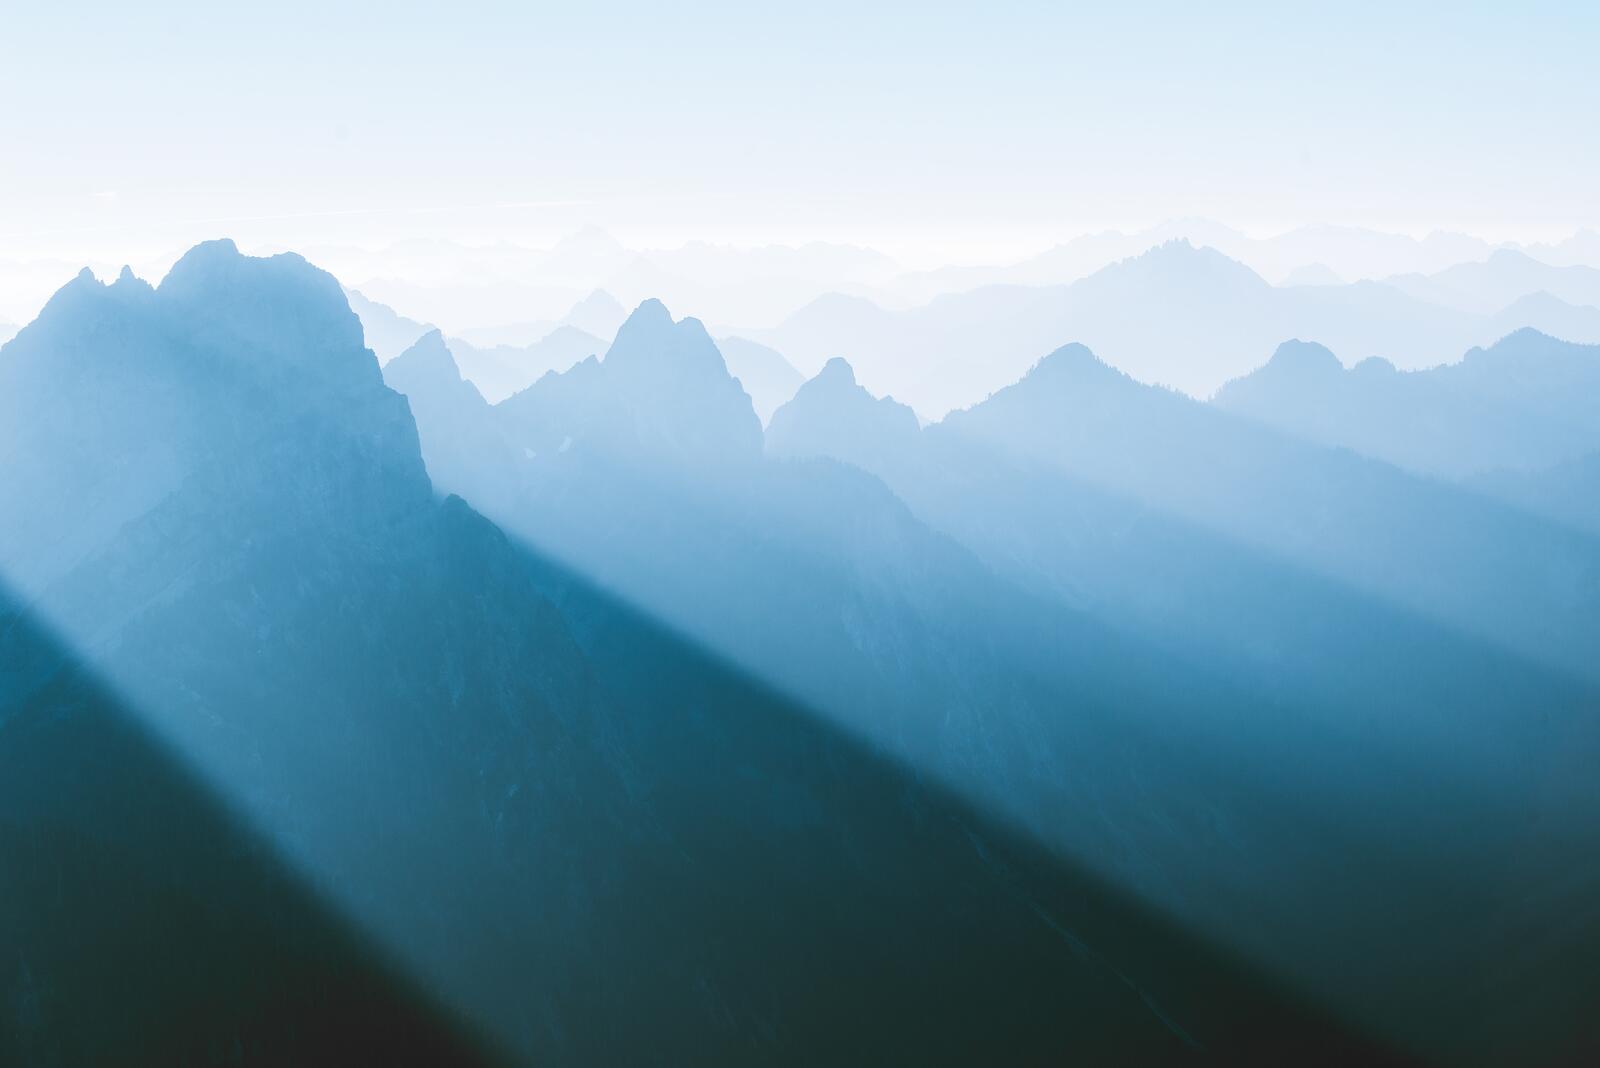 Wallpapers light cascade foggy mountains on the desktop